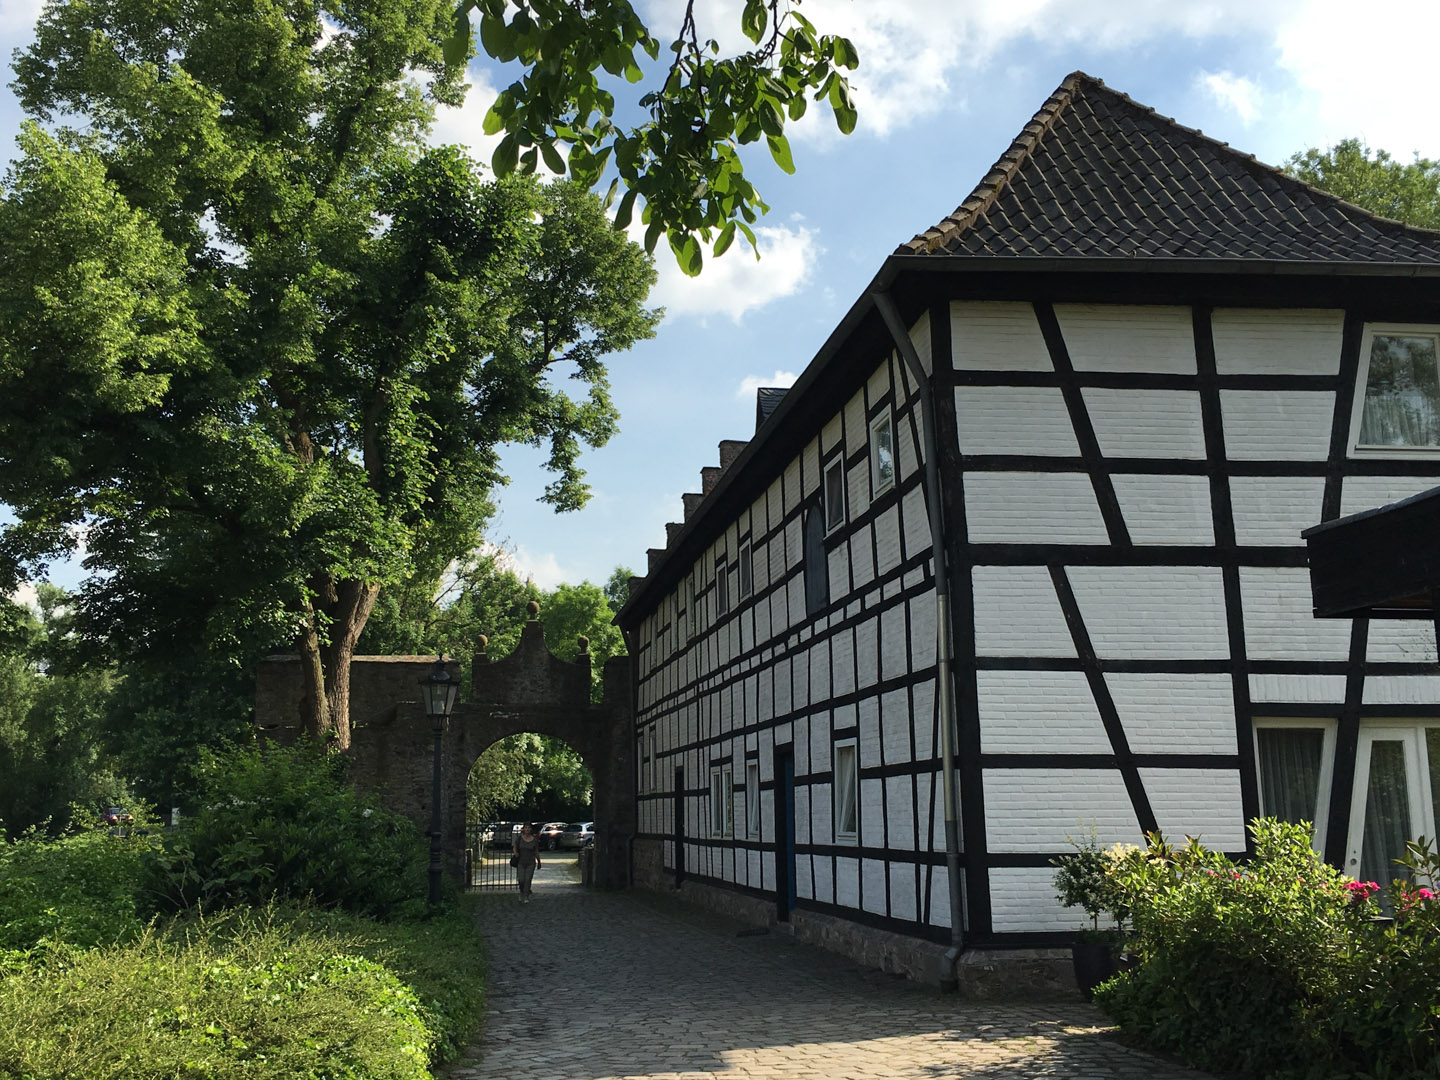 17th century Haus zum Haus (House to House) in Ratingen